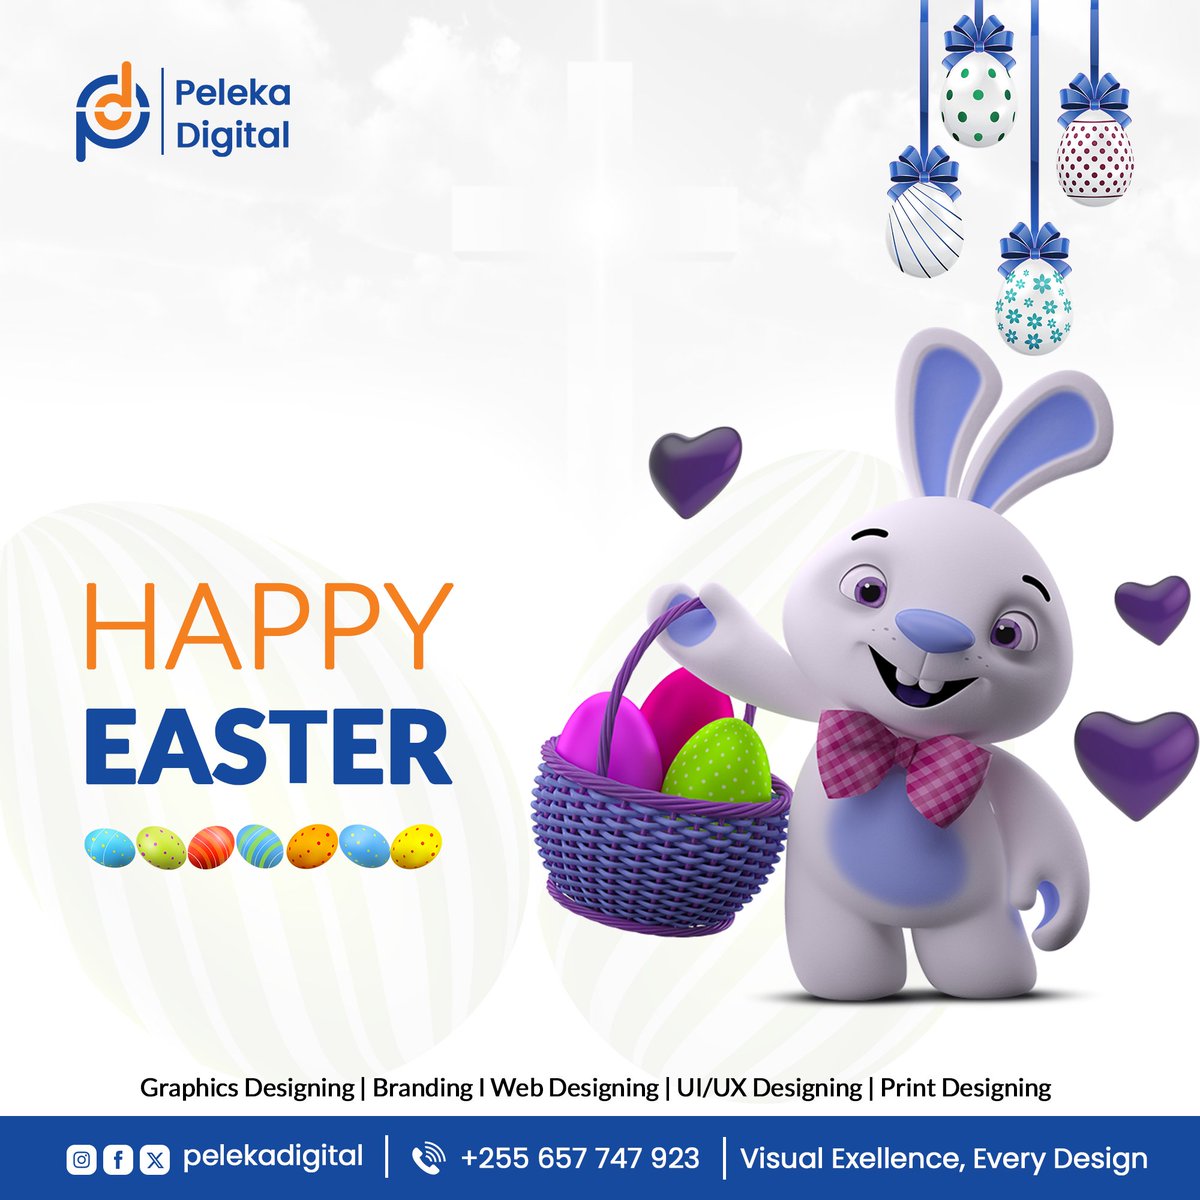 Happy Easter! #pelekadigital #Easter